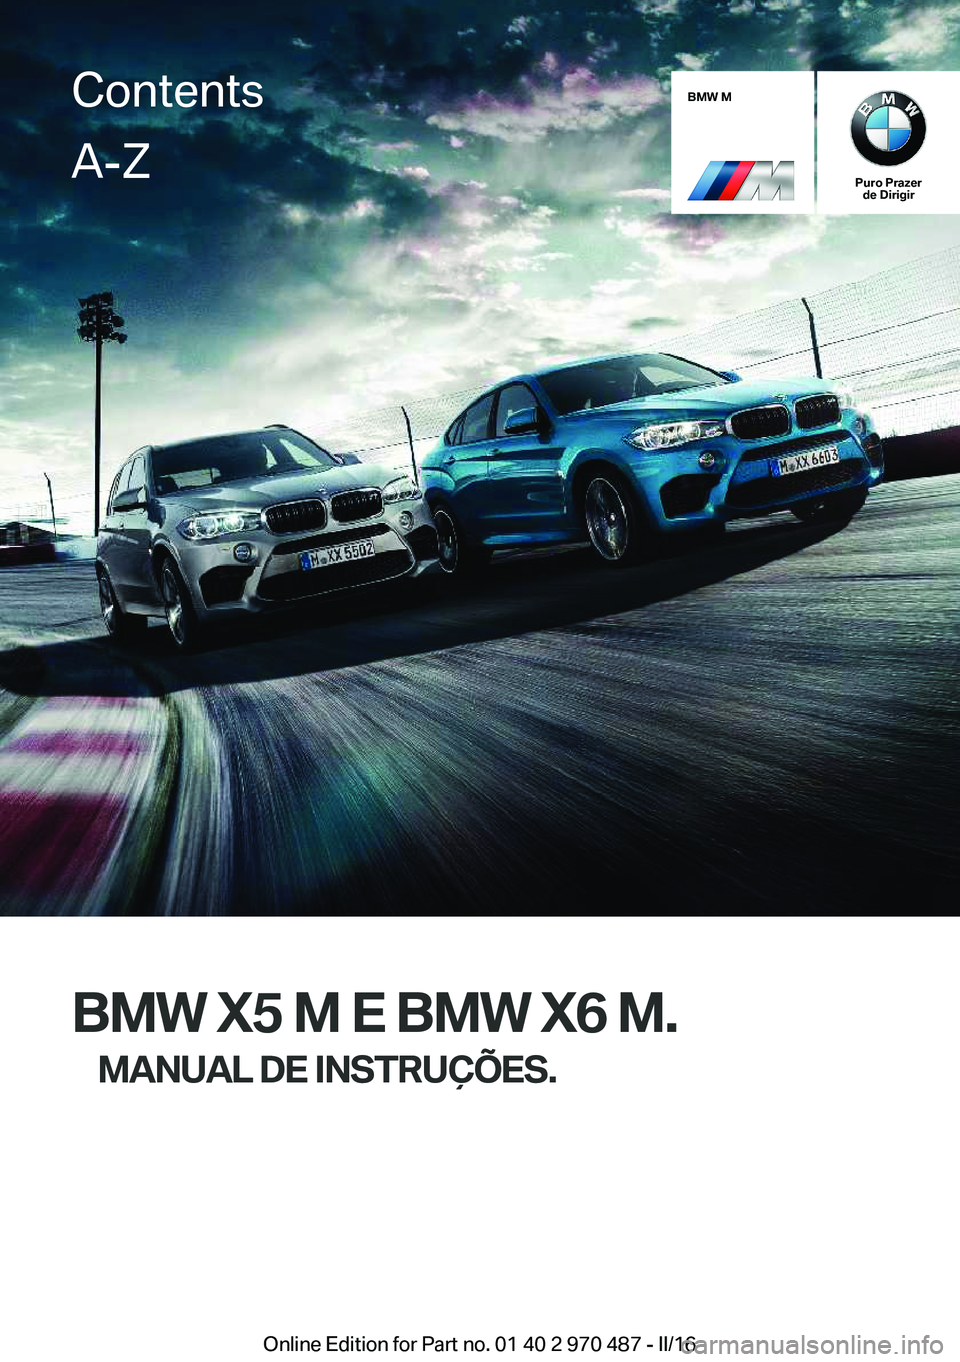 BMW X6 M 2016  Manual do condutor (in Portuguese) BMW M
Puro Prazerde Dirigir
BMW X5 M E BMW X6 M.
MANUAL DE INSTRUÇÕES.
ContentsA-Z
Online Edition for Part no. 01 40 2 970 487 - II/16   